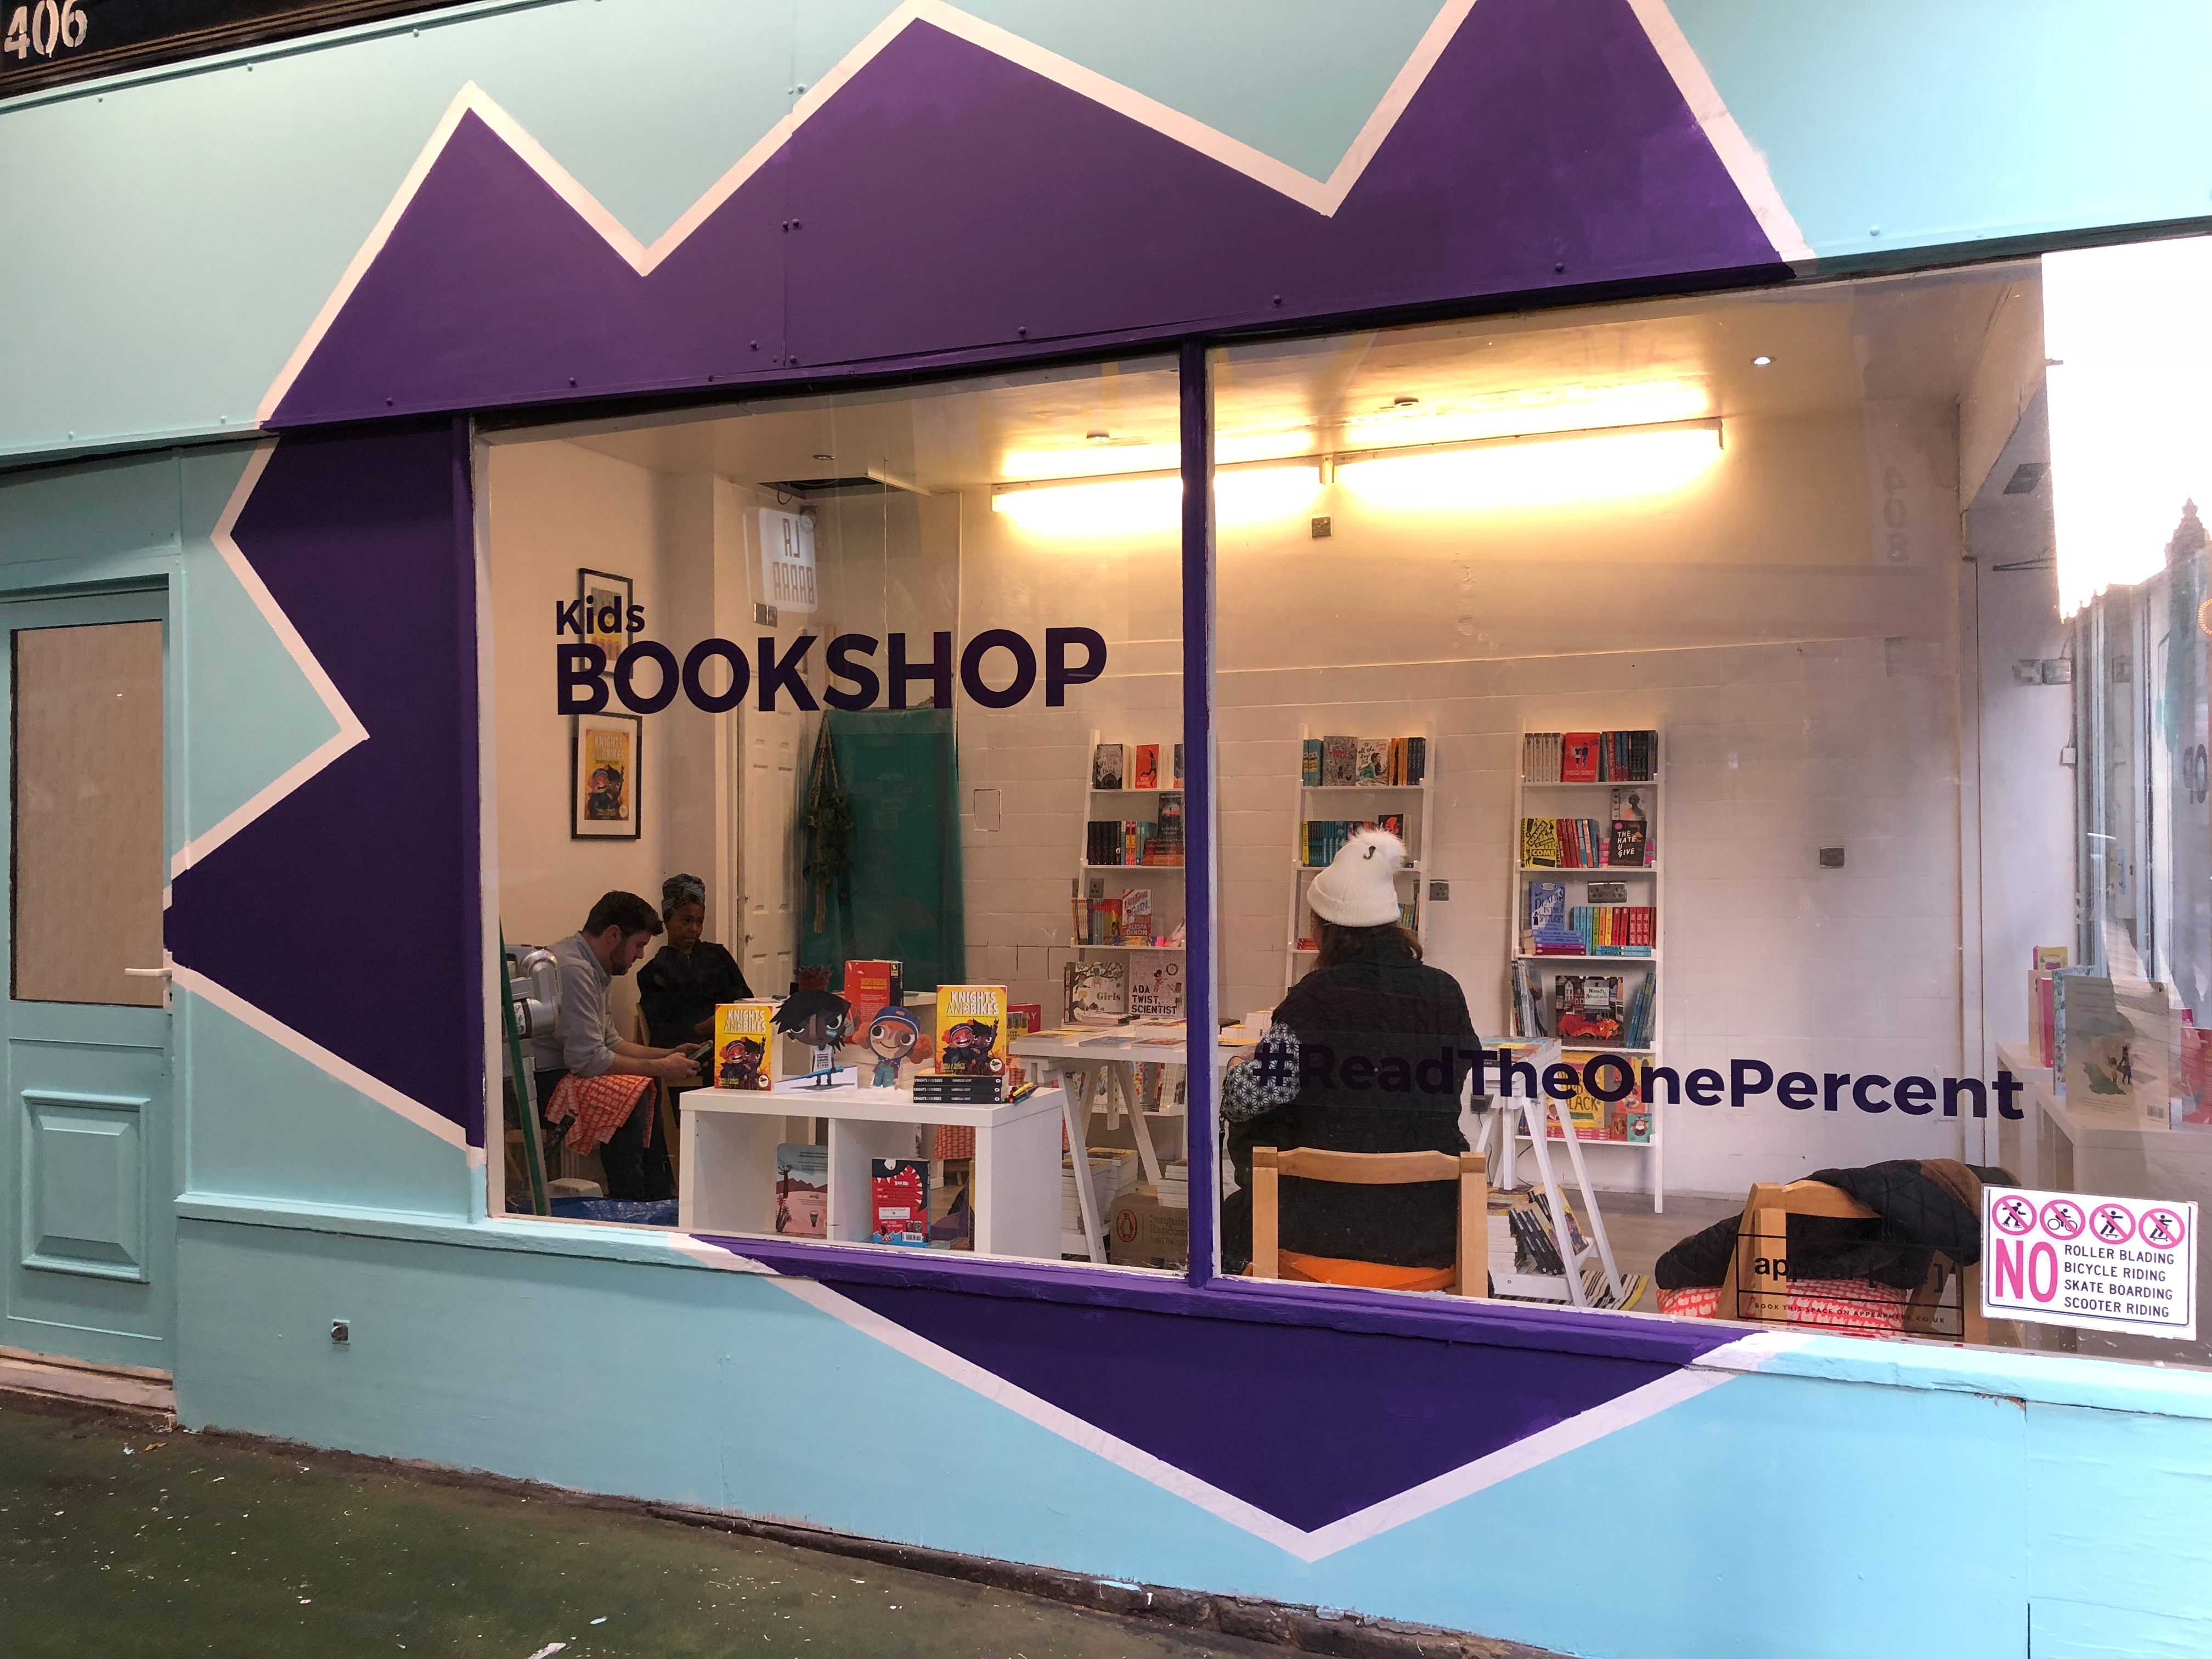 The #ReadTheOnePercent bookshop